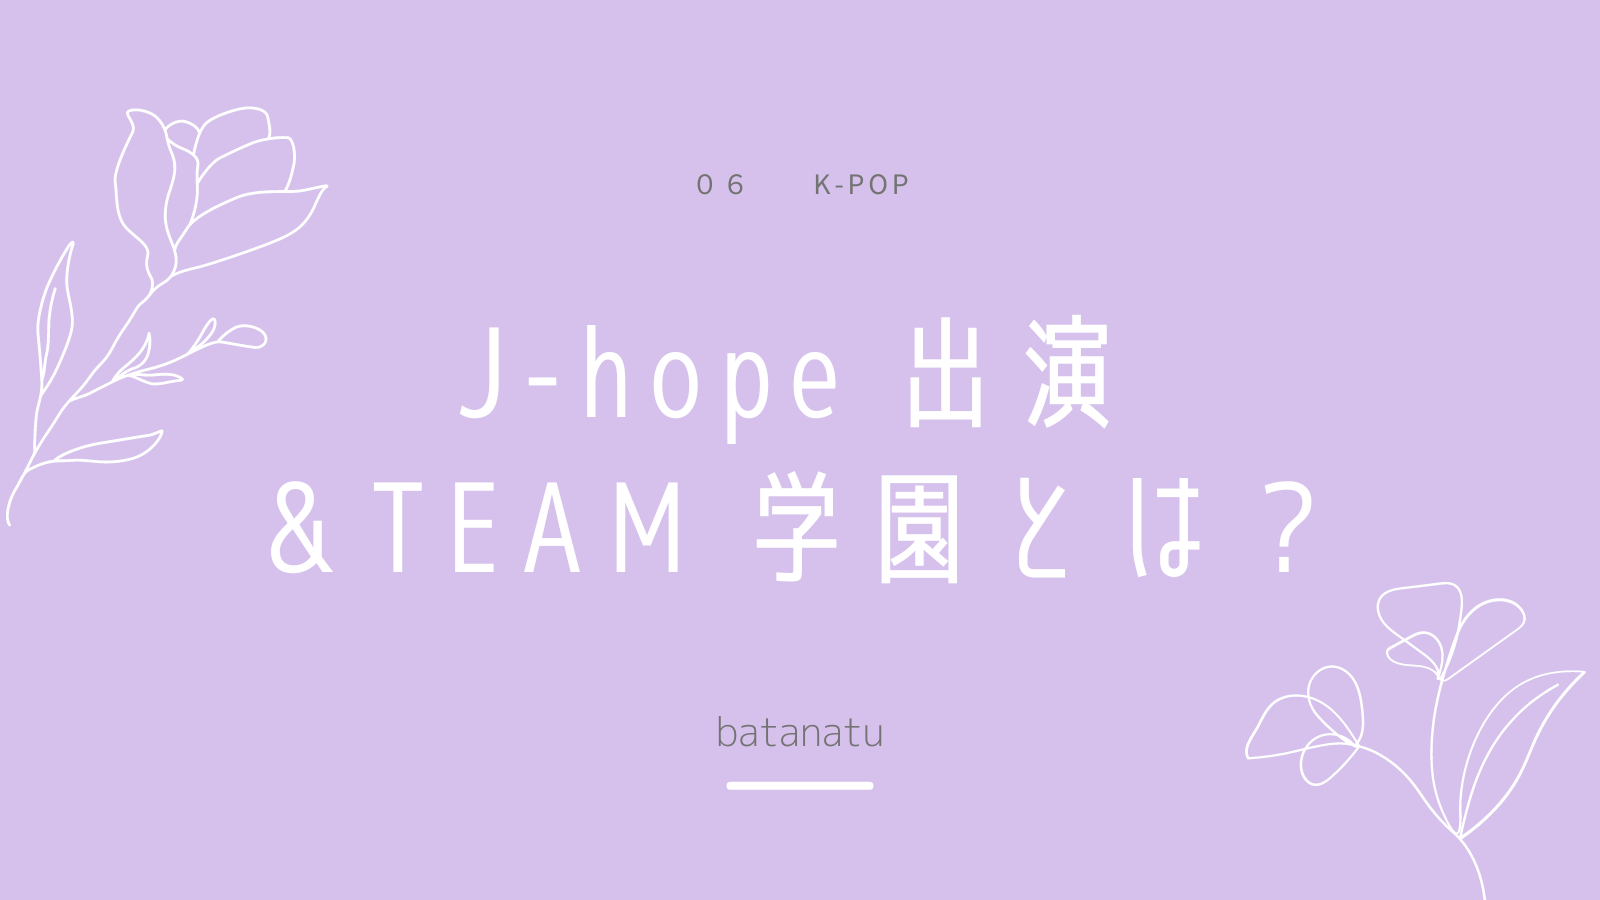 &teamにj-hope